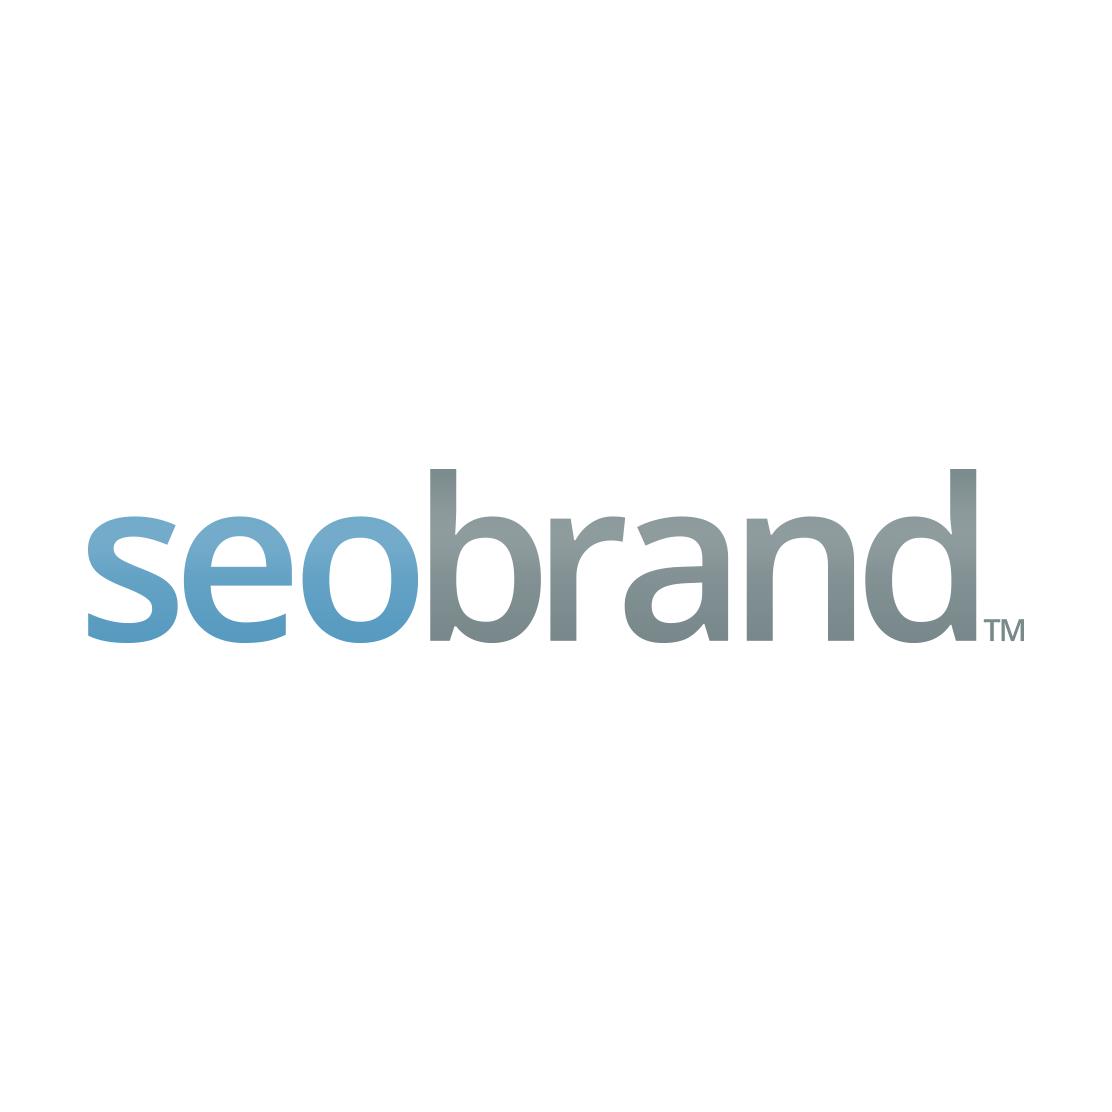 Best Philly SEO Firm Logo: SEO Brand